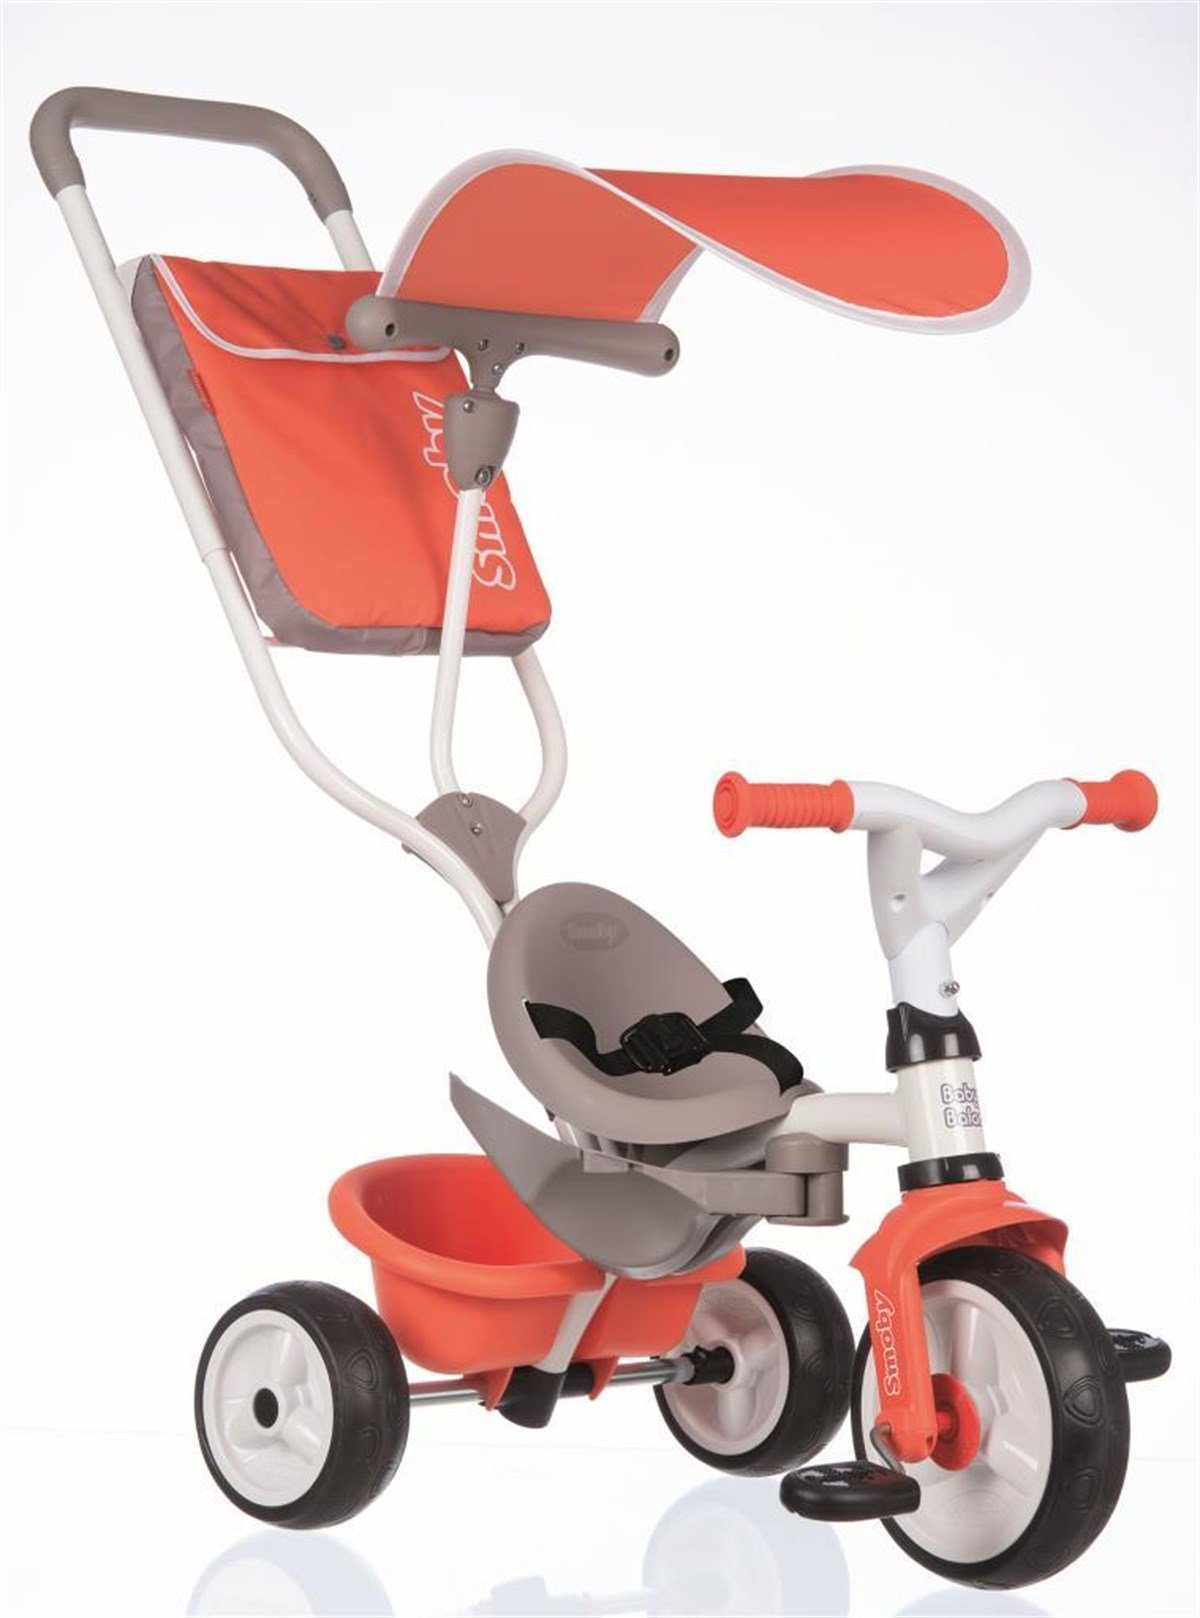 Smoby 3 Tekerlekli Çocuk Bisikleti 3'ü1 Arada Set - Kırmızı 741105 - Toysall